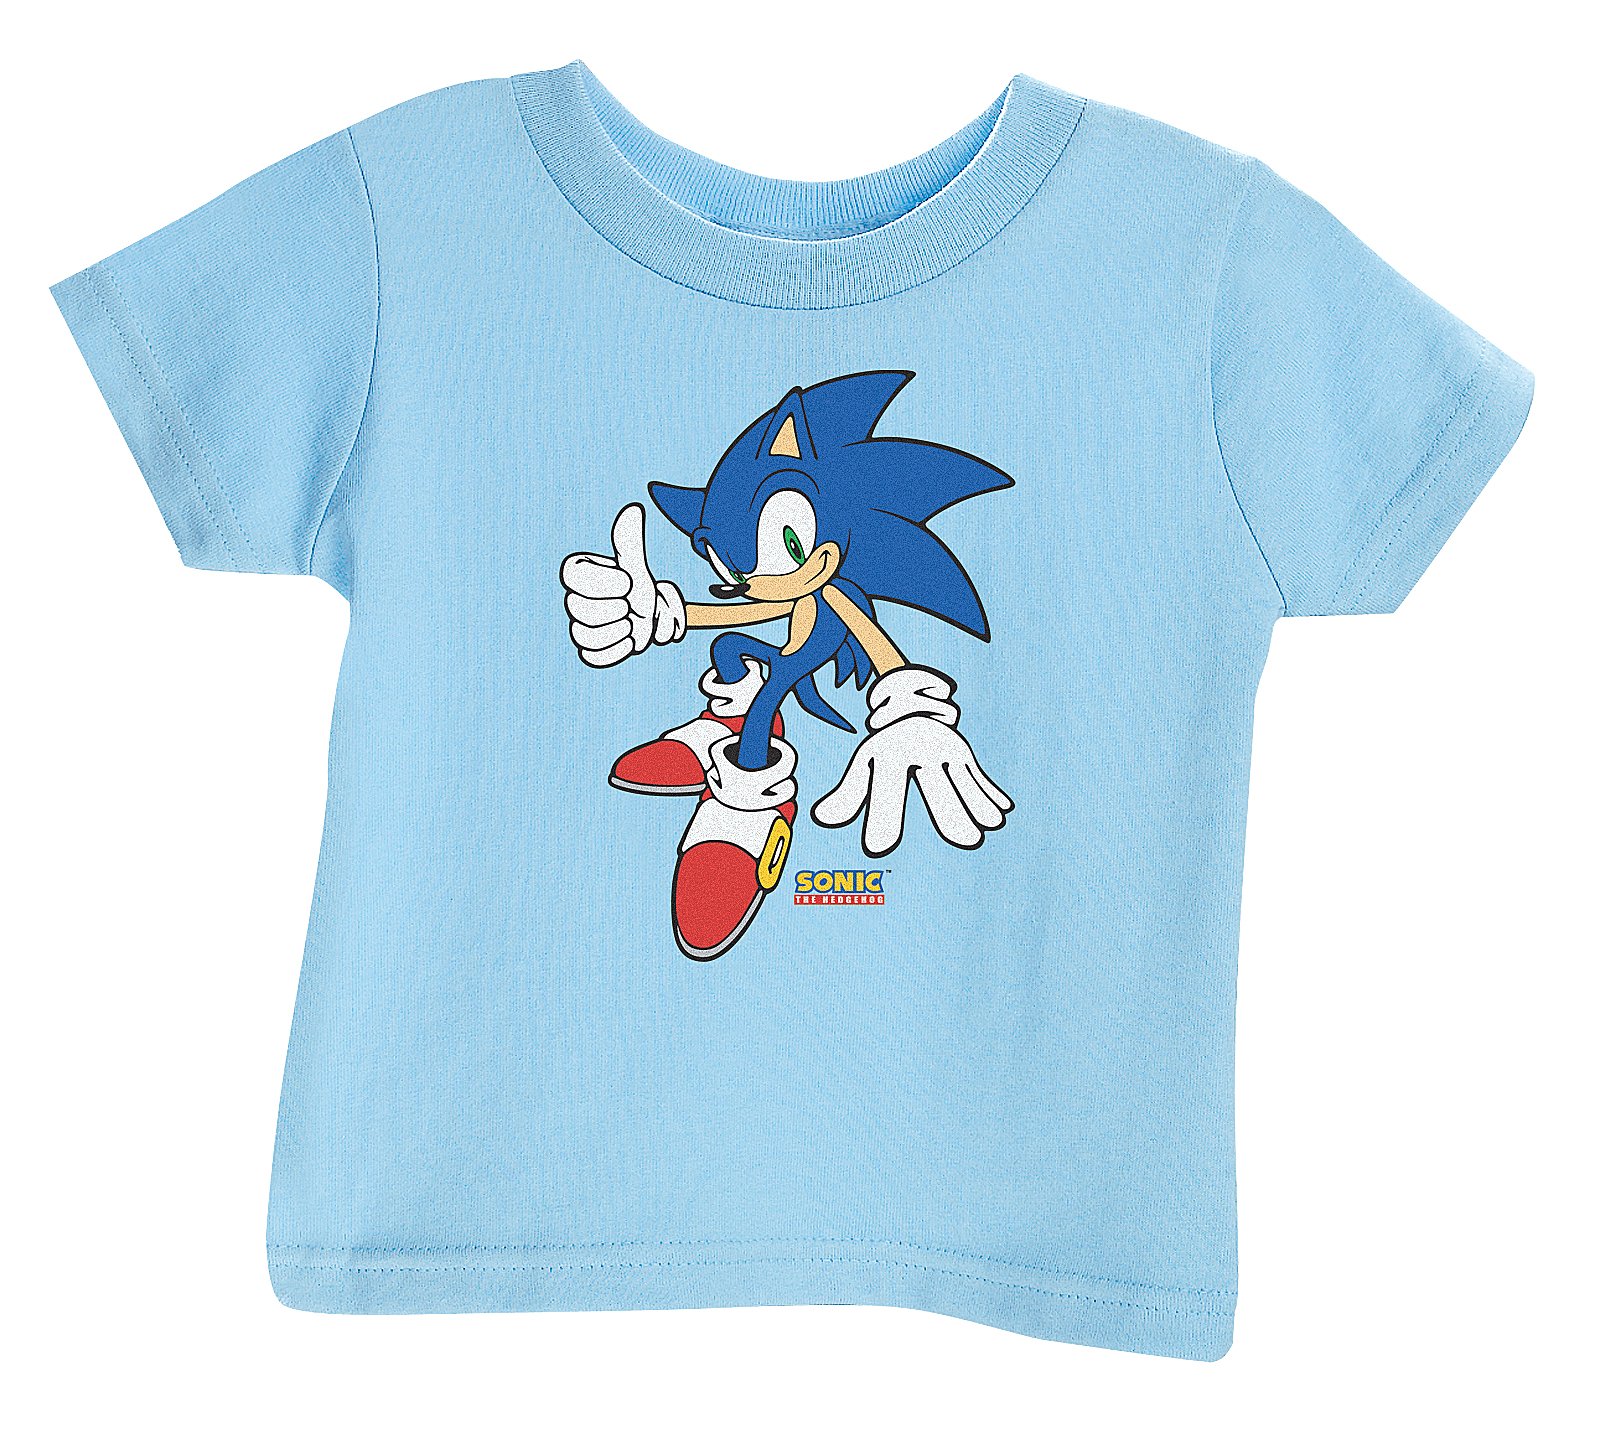 Sonic the Hedgehog T-Shirt - Click Image to Close